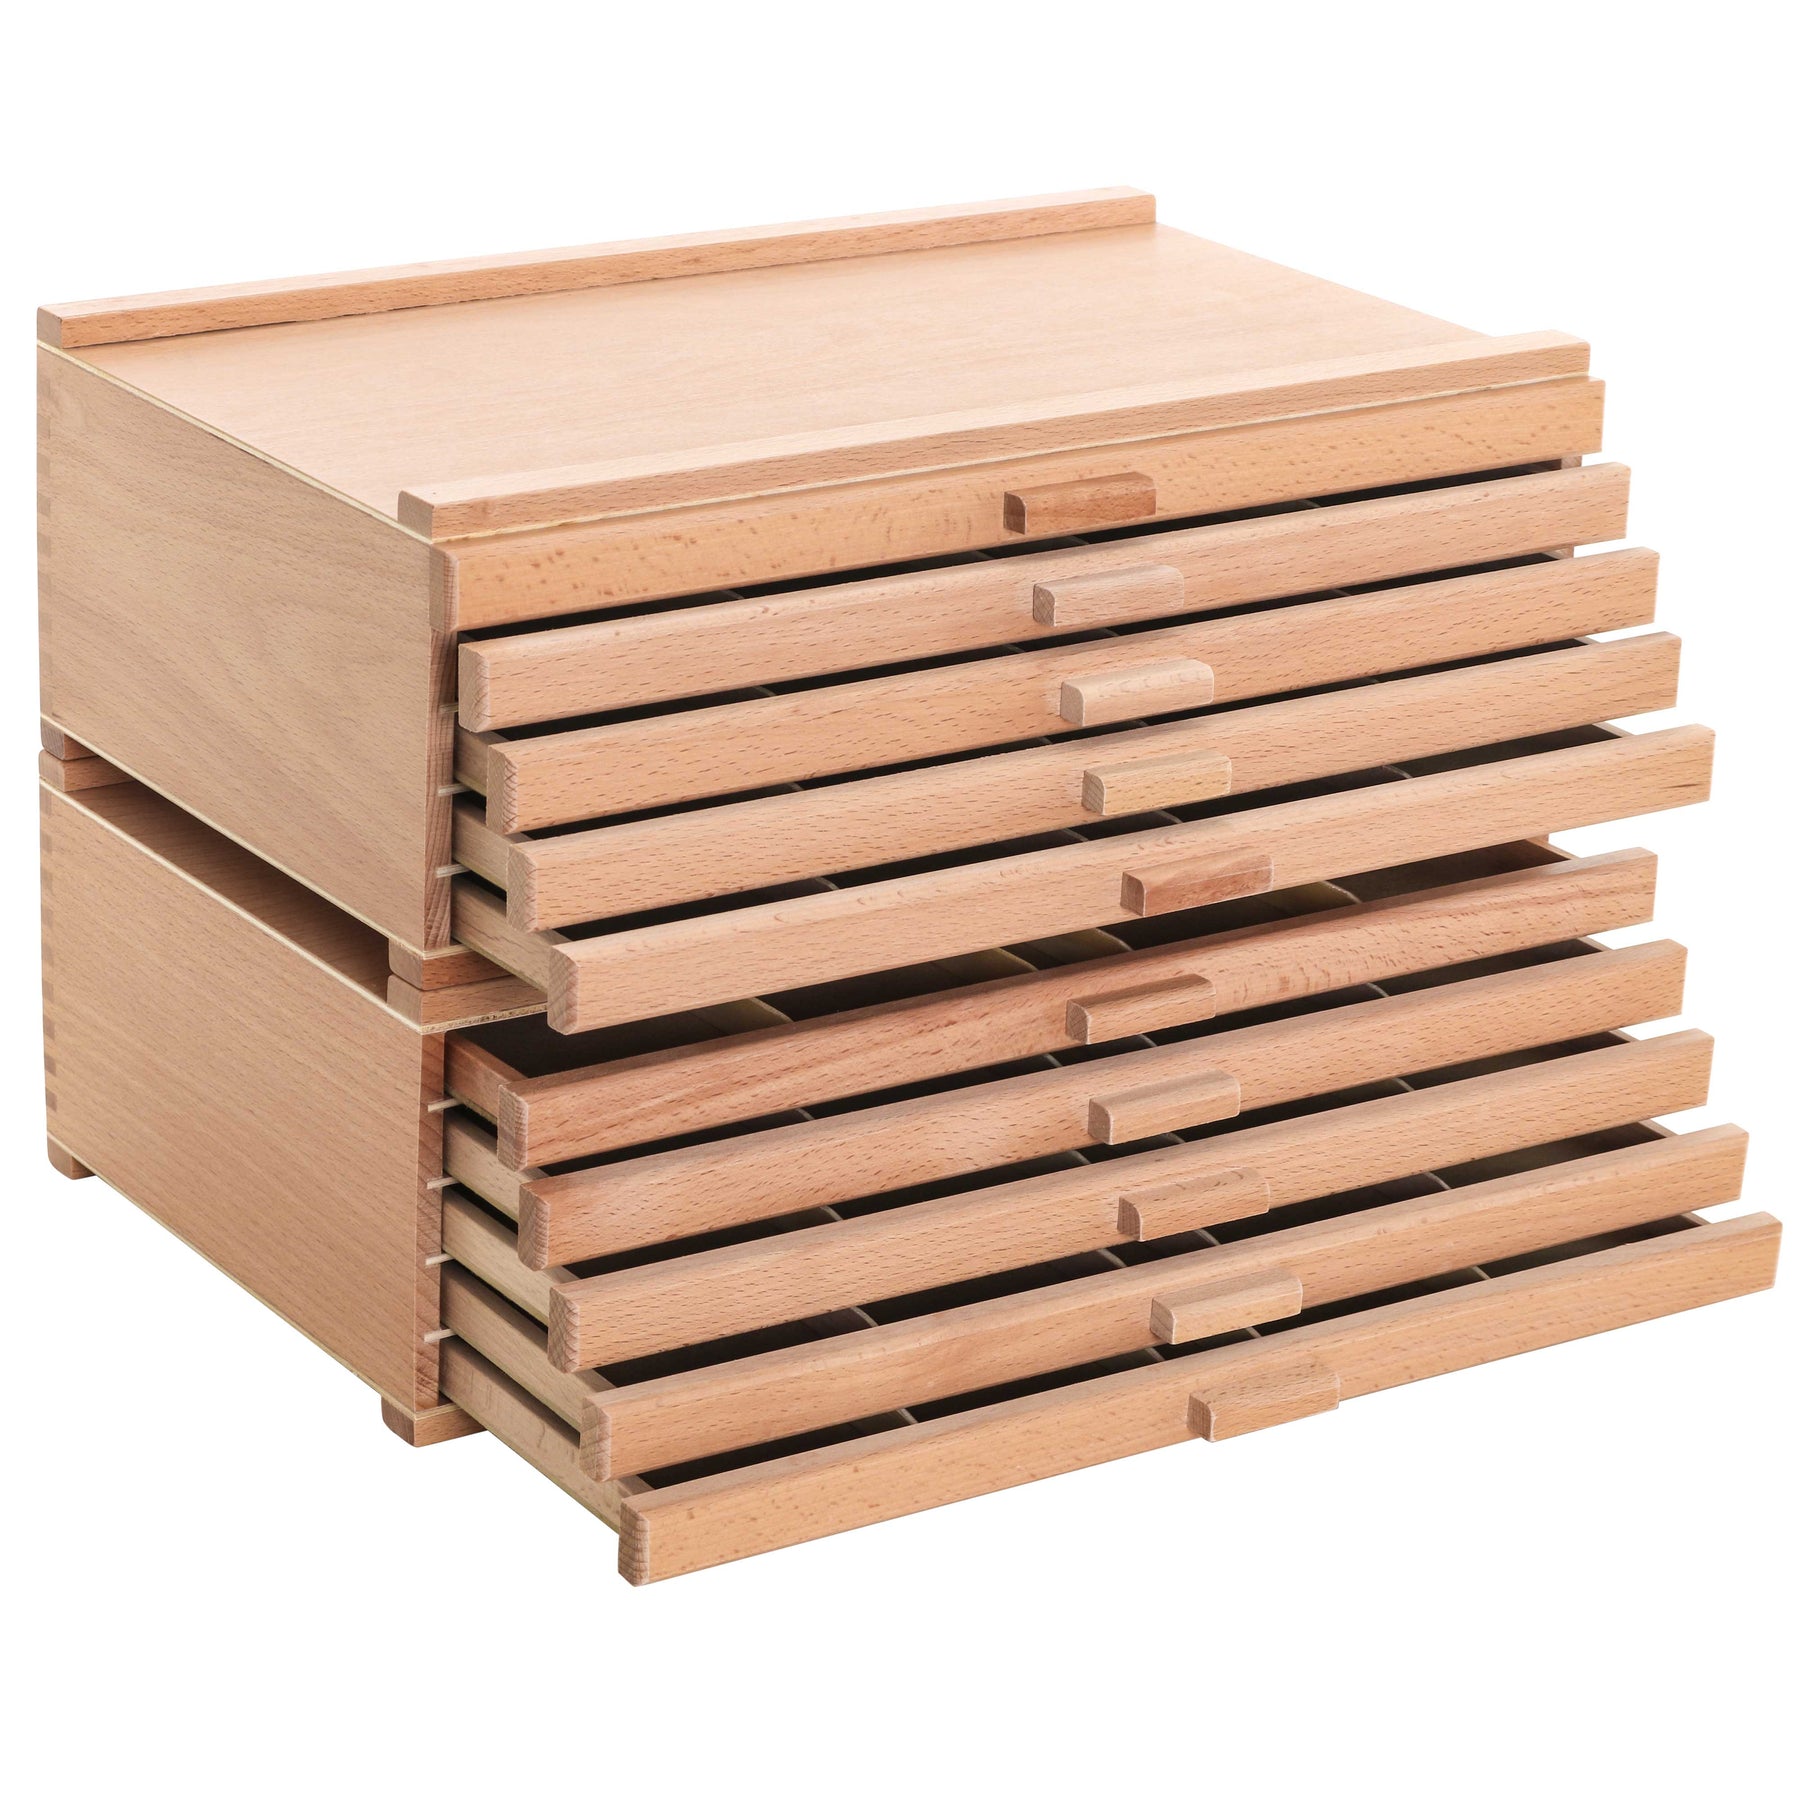 Global Distribution European Art Supplies R&L Wooden Box Sketch & Draw B